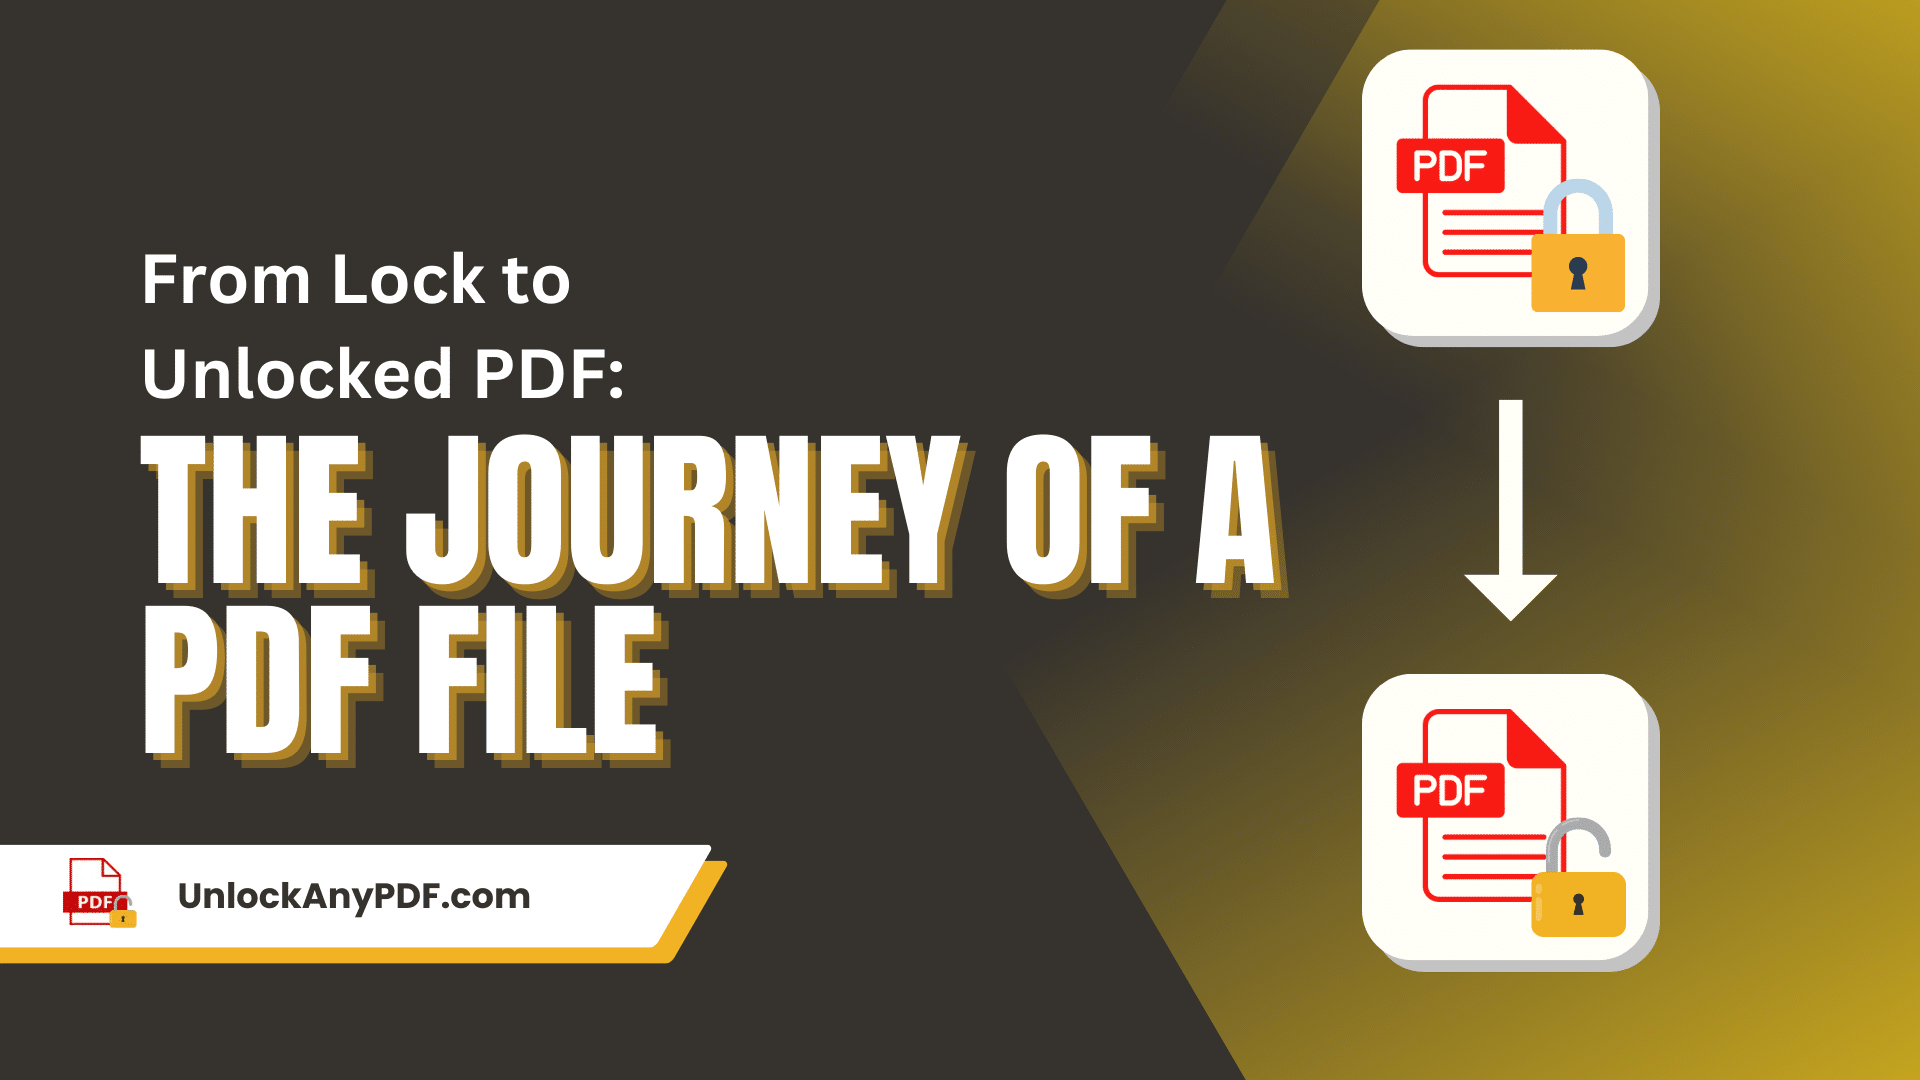 From Lock to Unlocked PDF